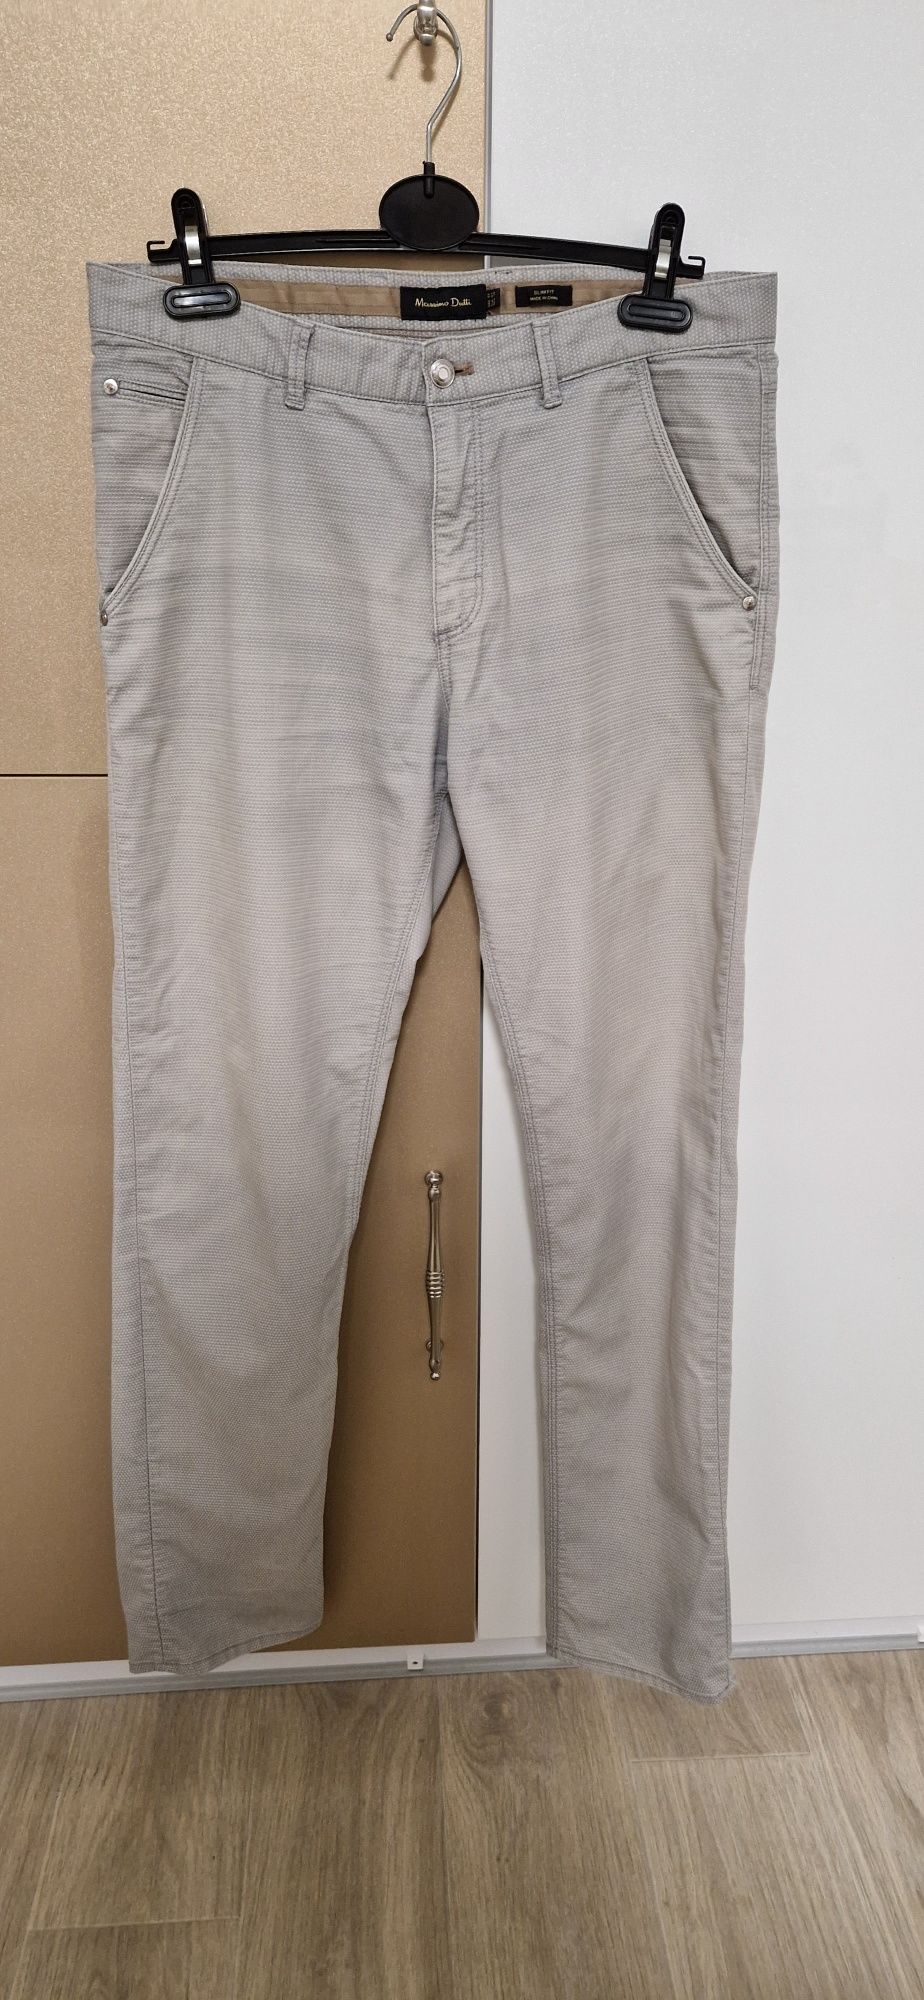 Мужские летние штаны, джинсы Massimo dutti